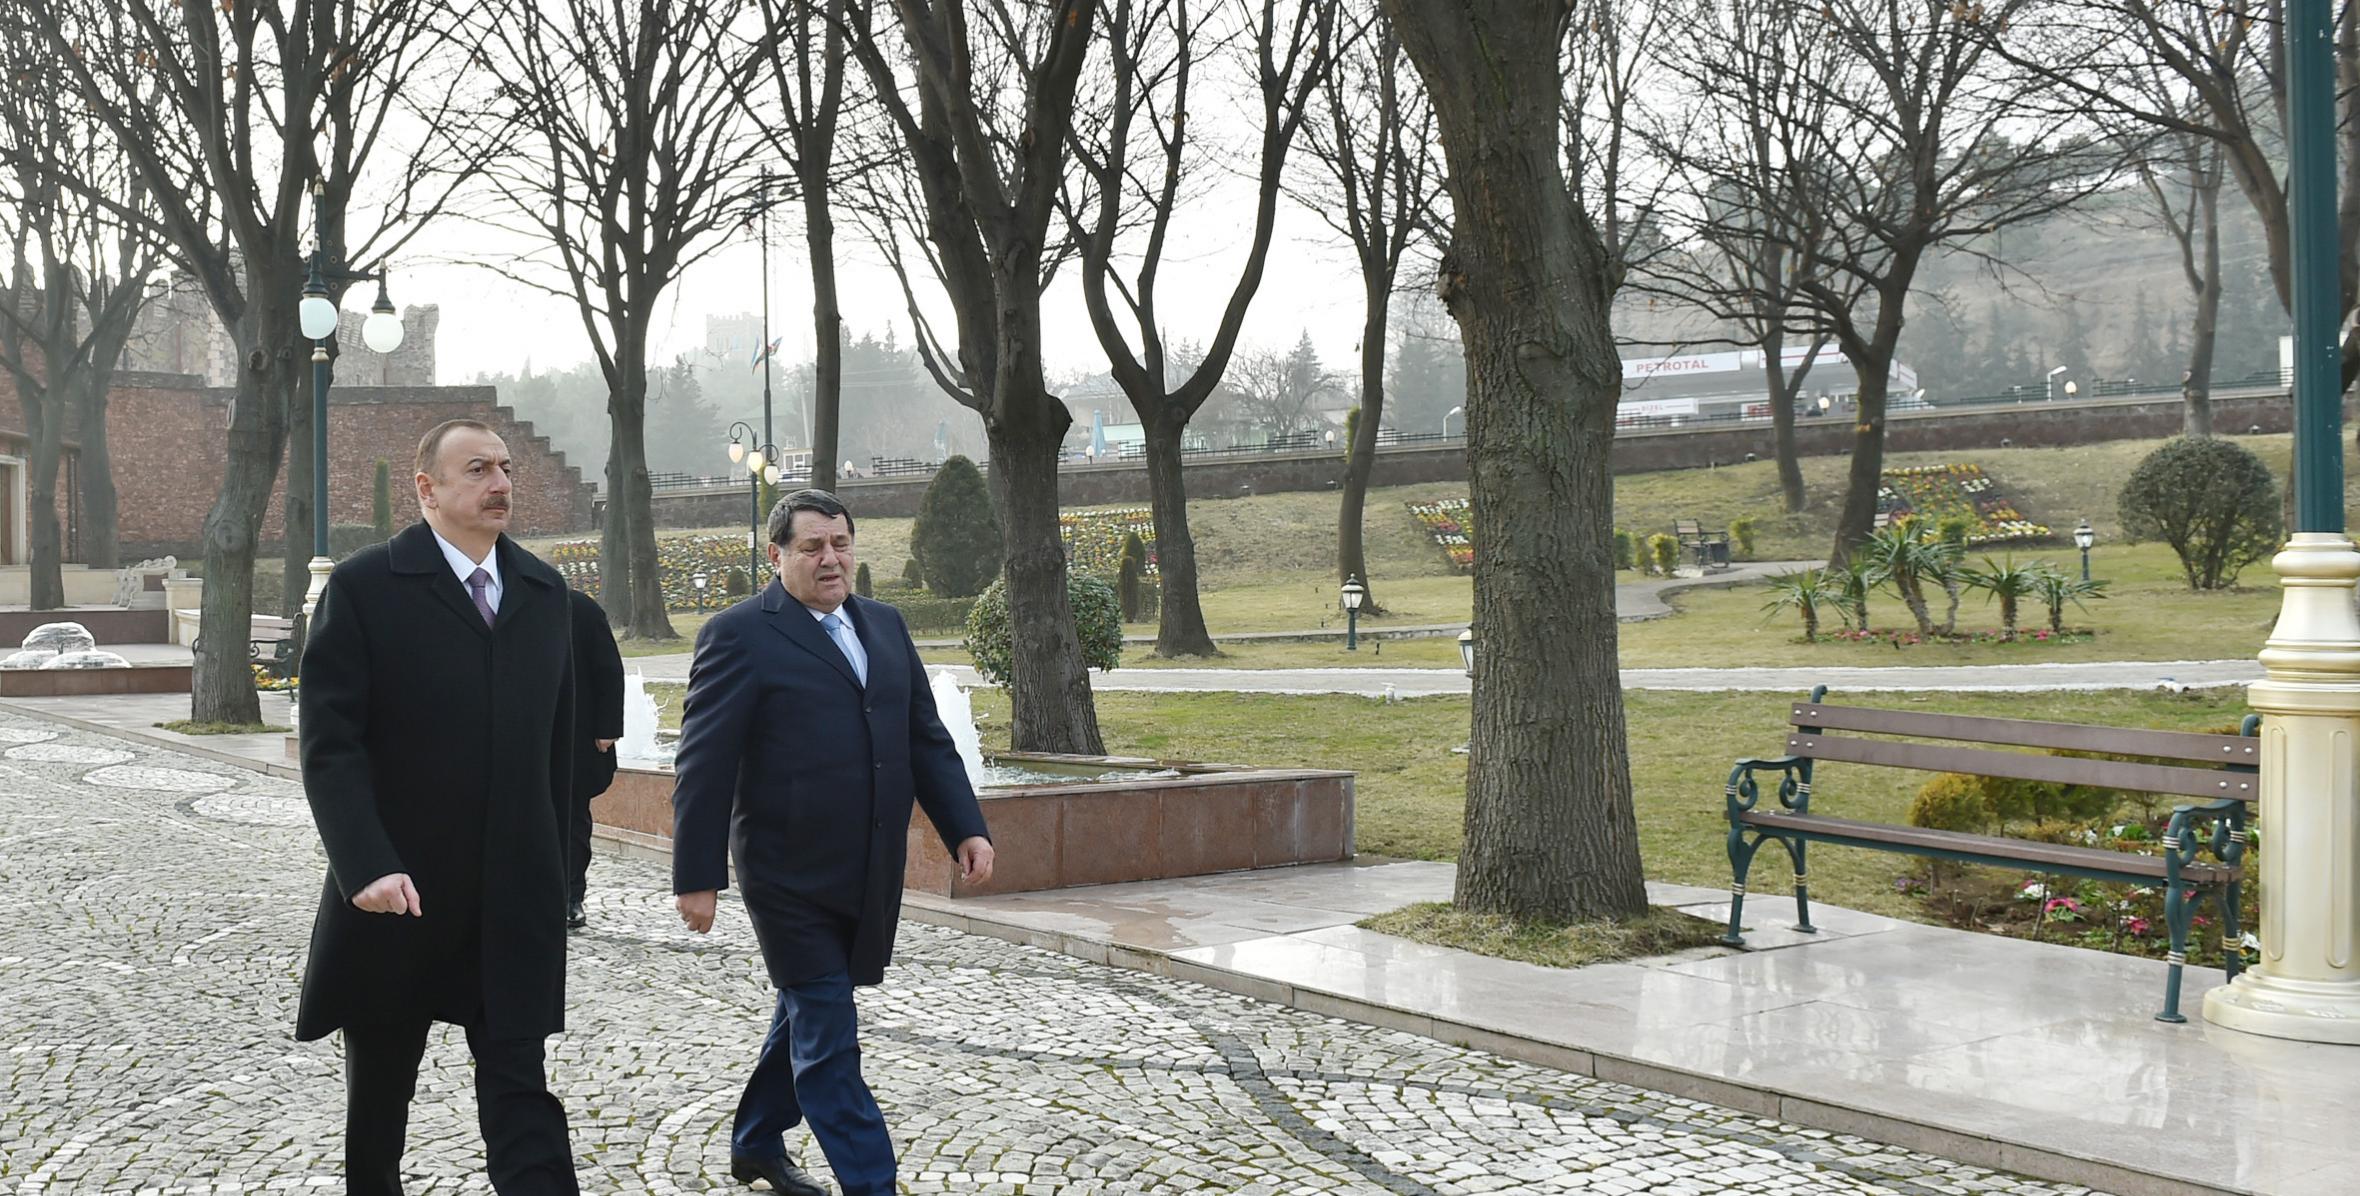 Ilham Aliyev visited Heydar Aliyev Park in Tovuz after reconstruction